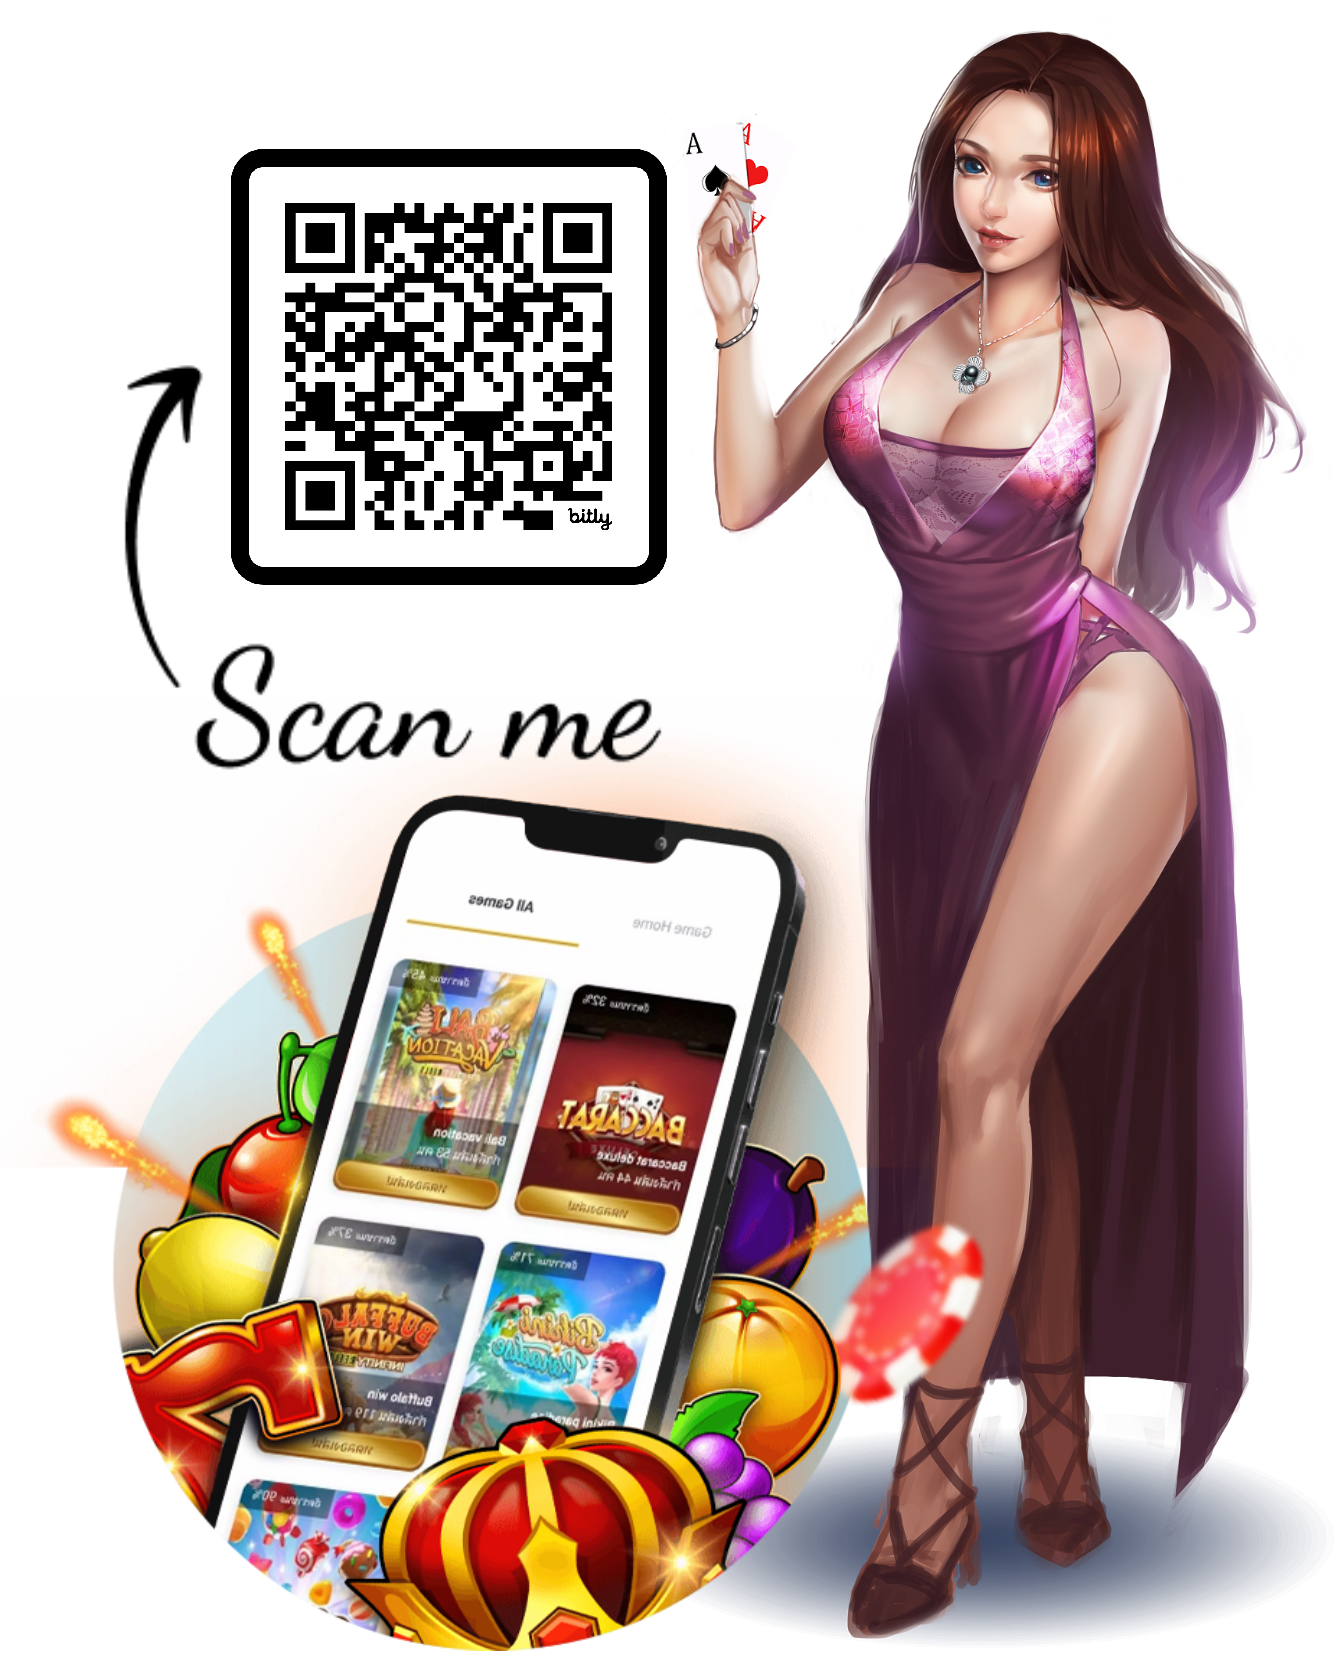 soloph casino download app 89